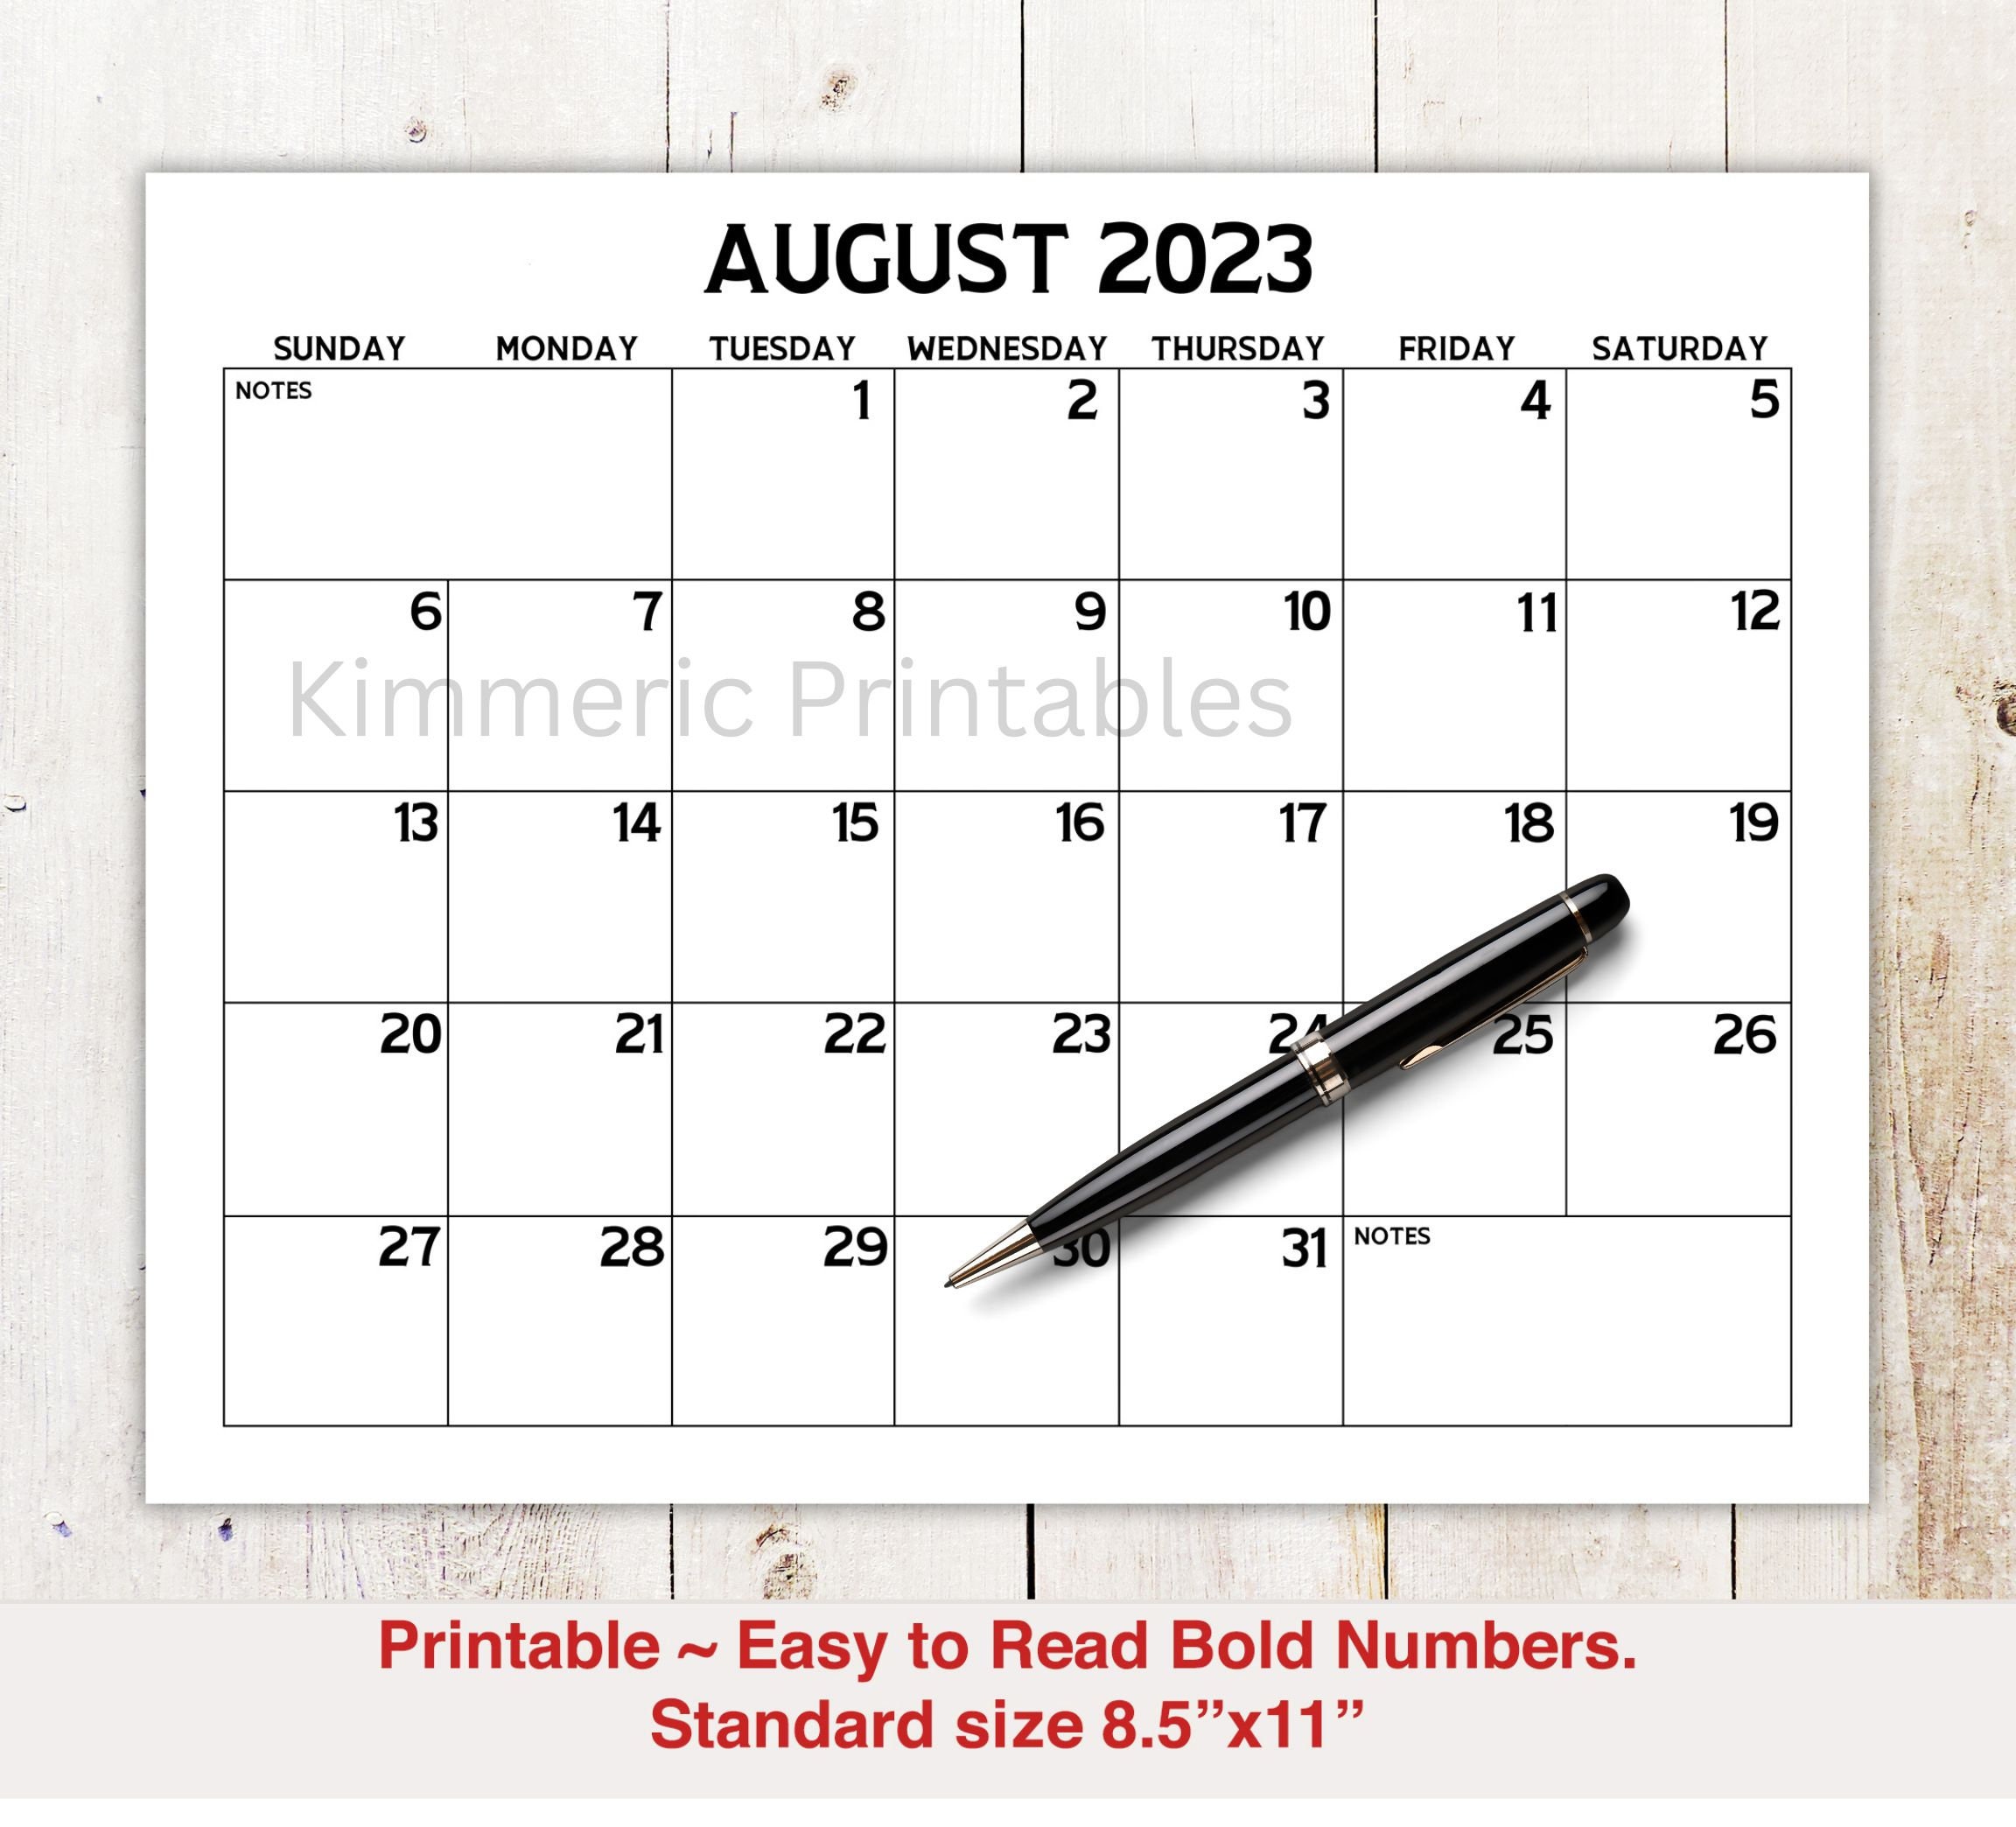 Aesthetic August Calendar [not mine]